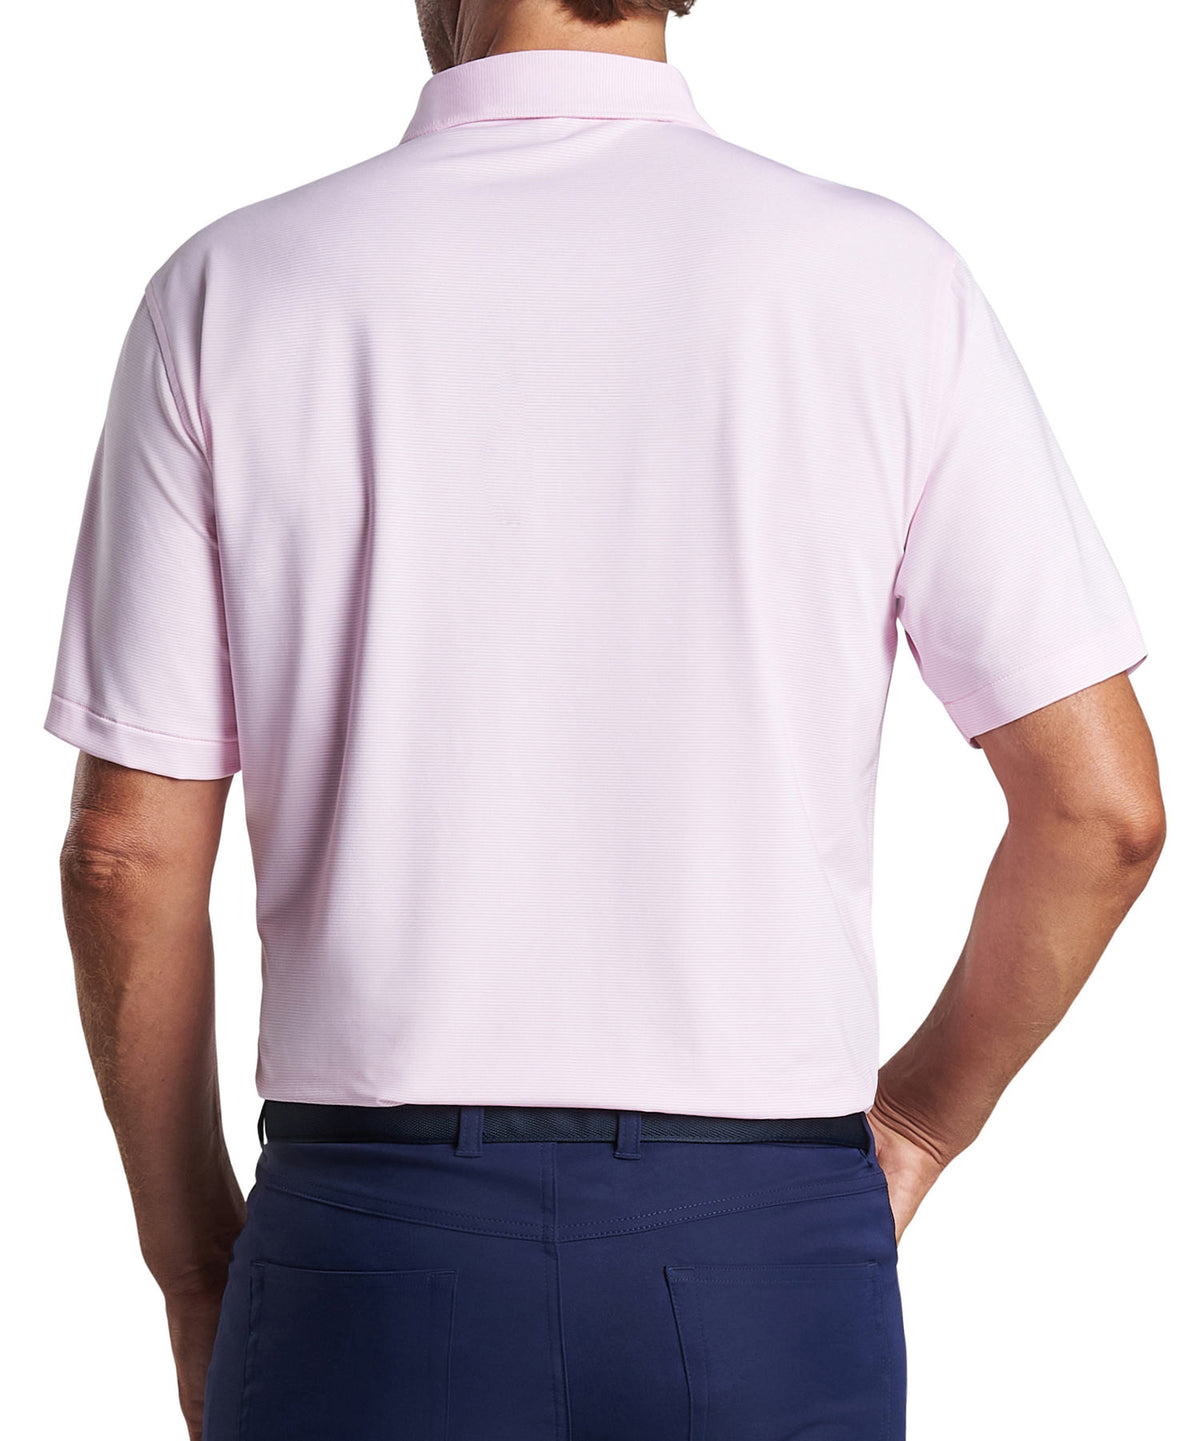 Peter Millar Short Sleeve Jubilee Stripe Polo Knit Shirt, Big & Tall